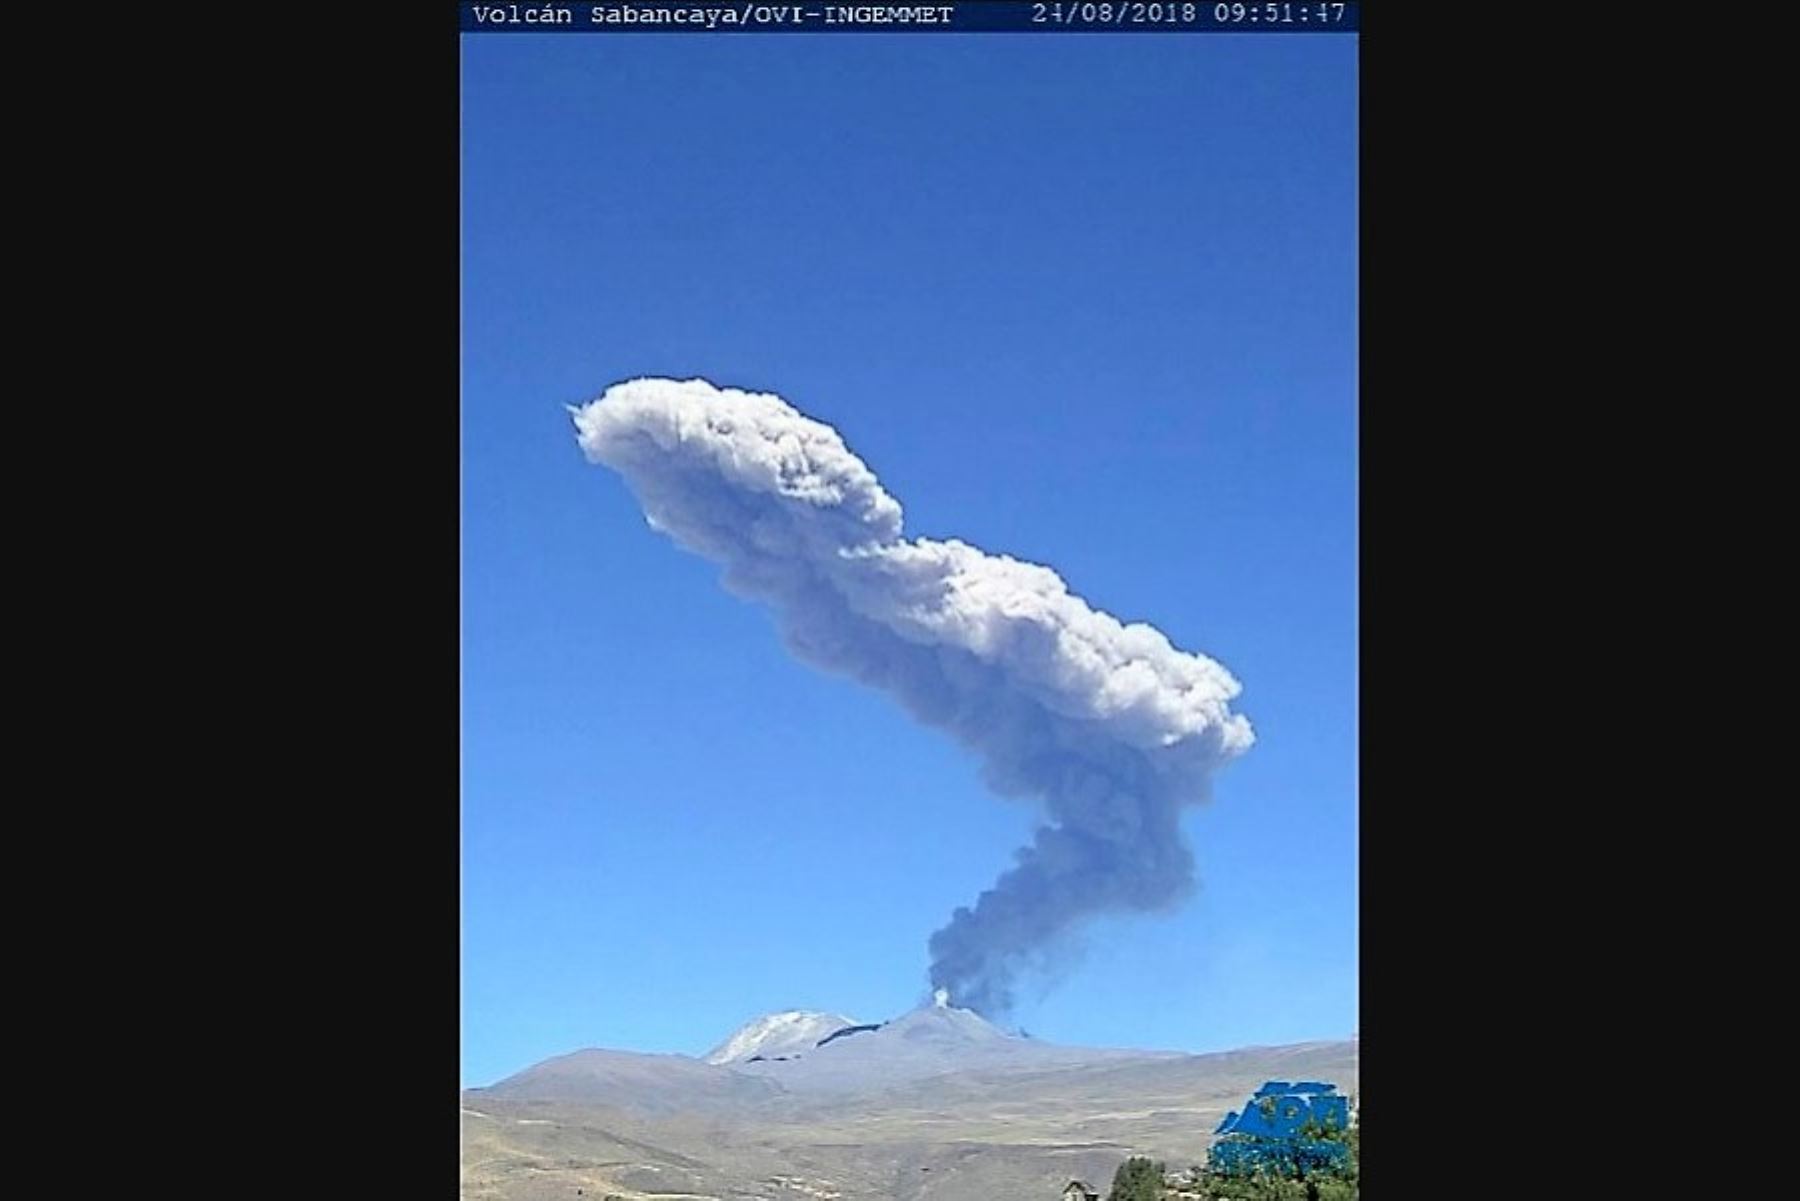 Explosión en volcán Sabancaya afecta a 7 distritos de Arequipa. FOTO: OVI/Ingemmet